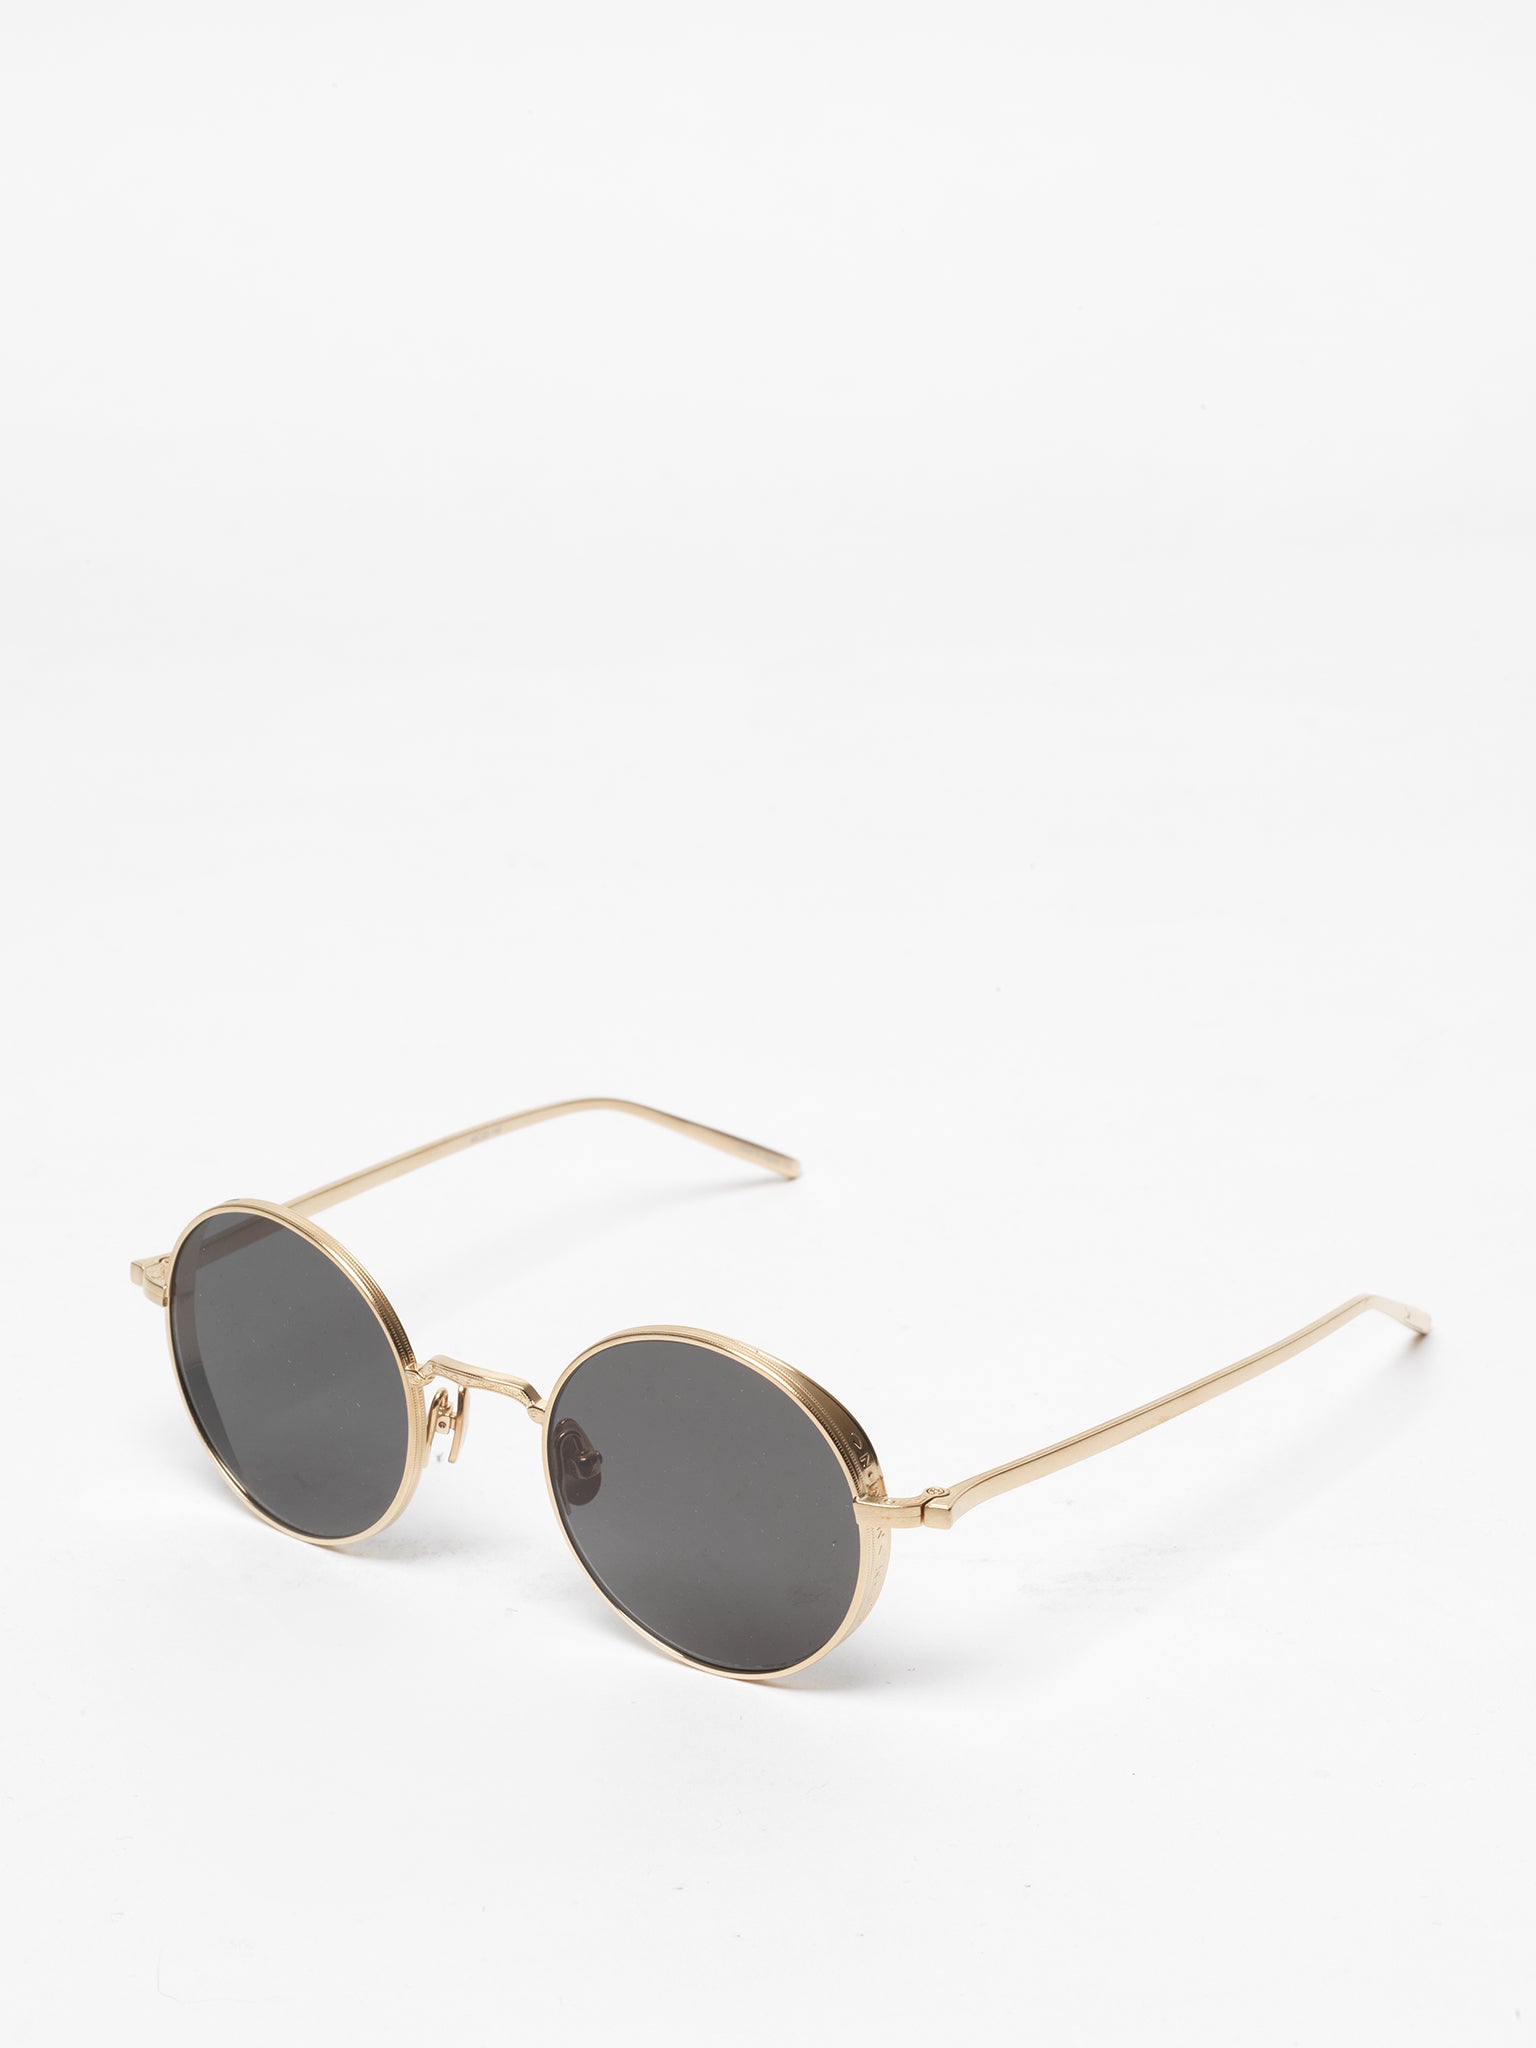 Matsuda Black M3087 Sunglasses